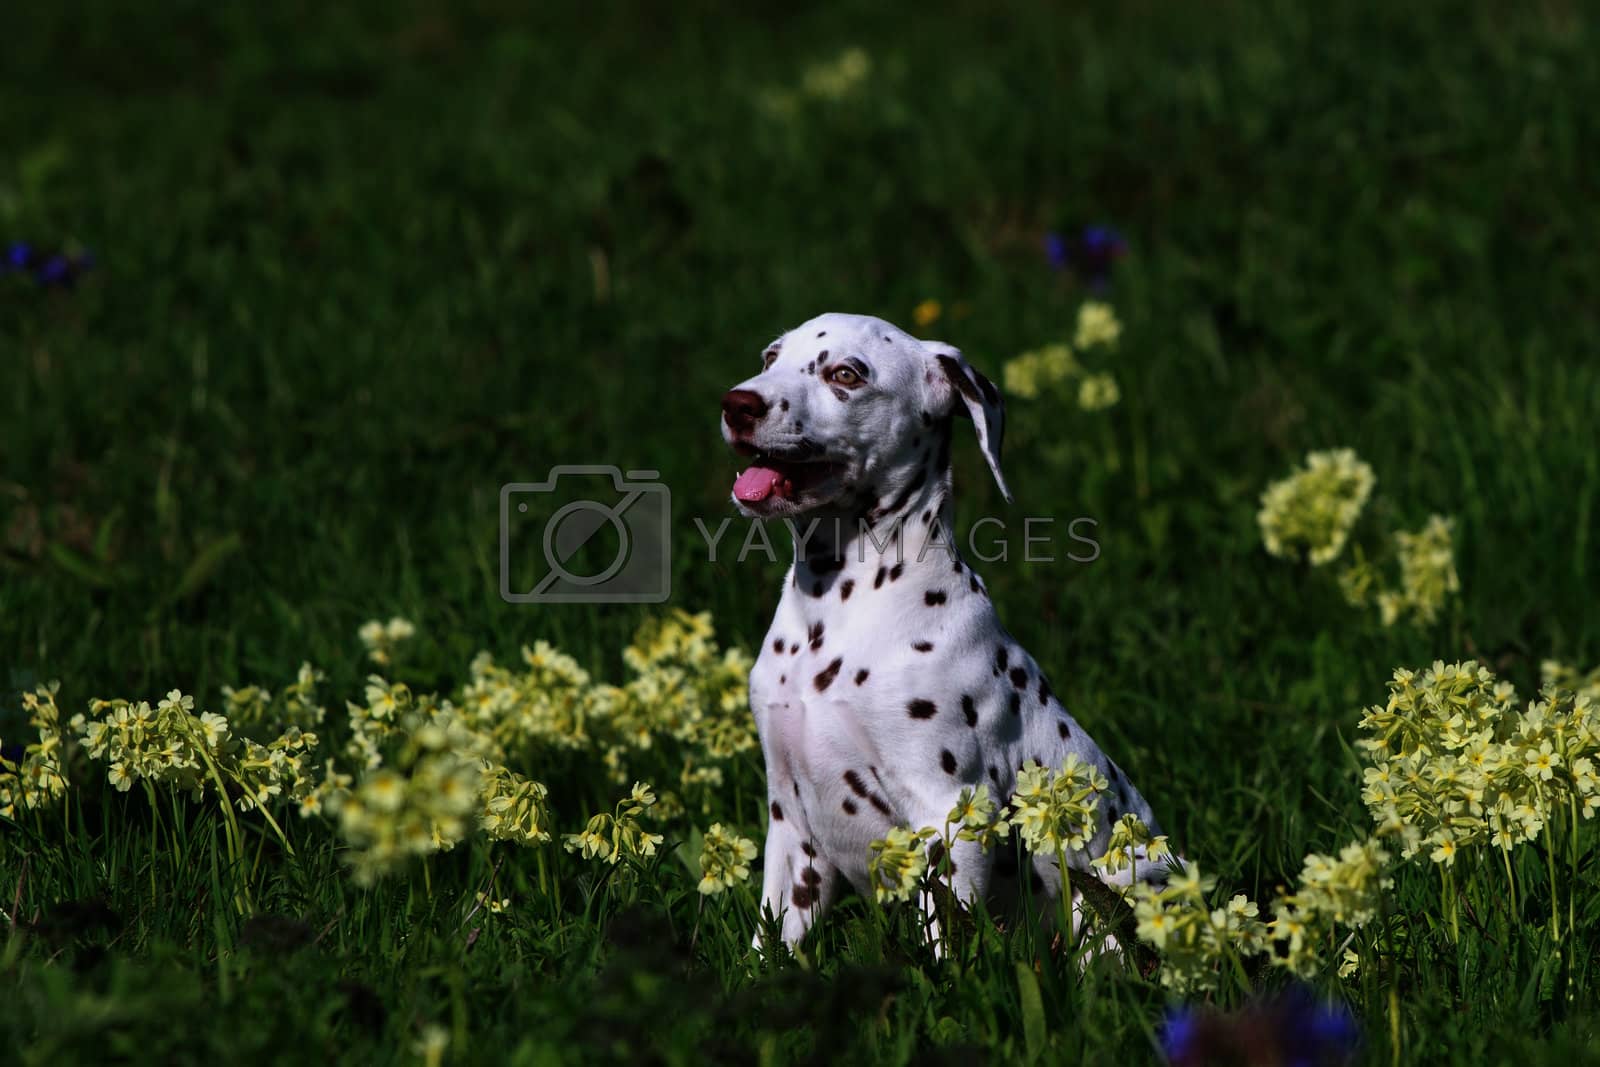 Royalty free image of Dalmatian puppy dog  by Ohotnik